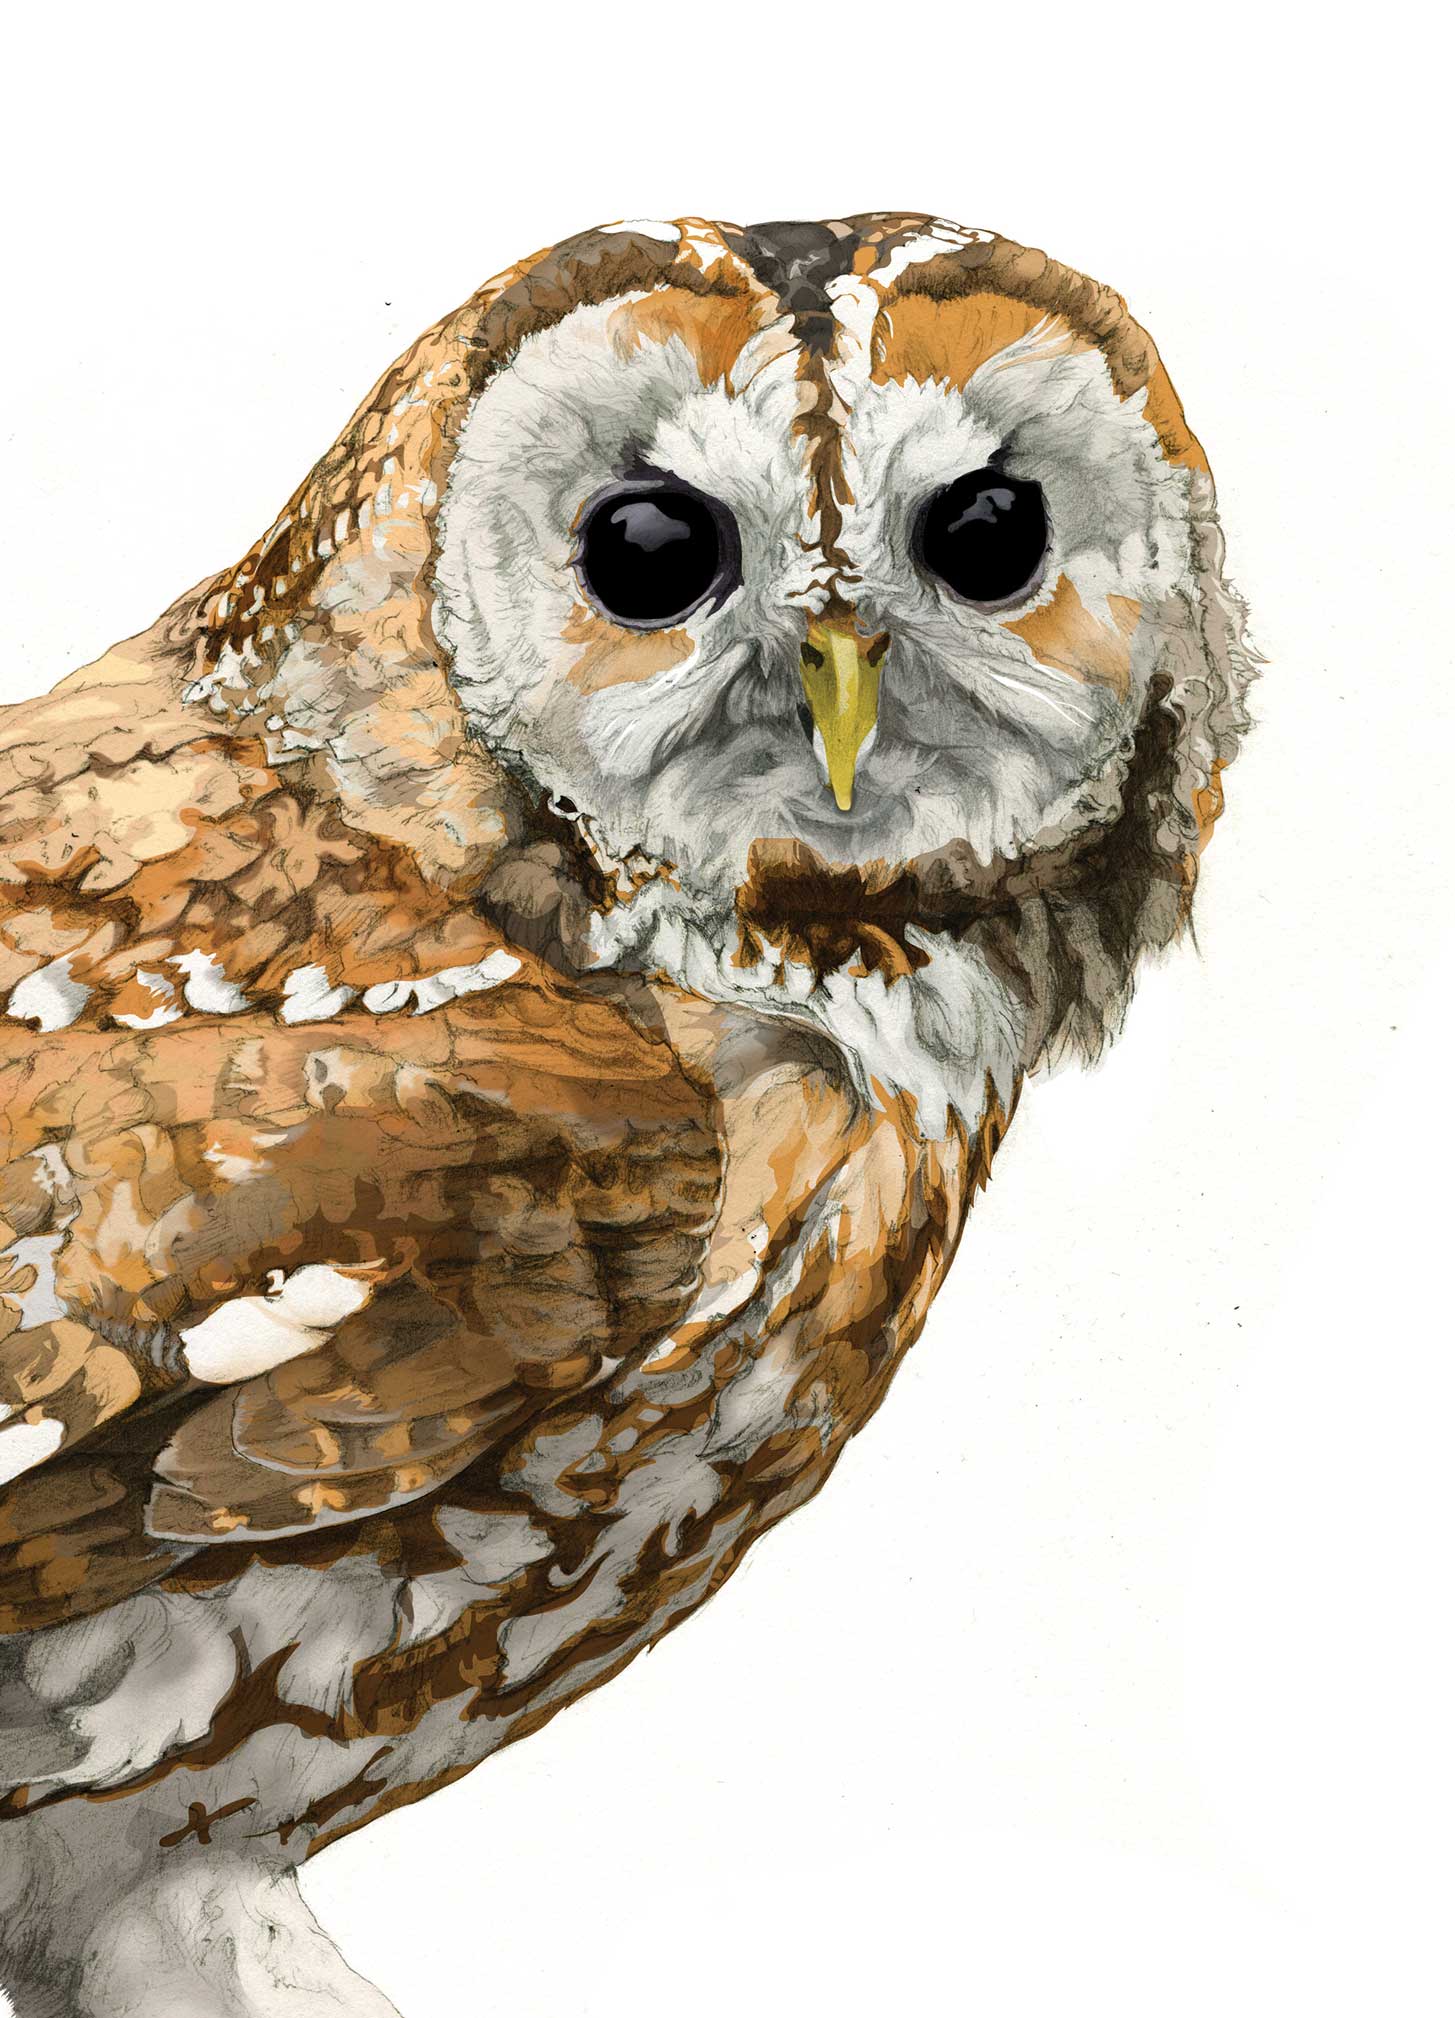 Tawny Owl illustration by Nick Ellwood.